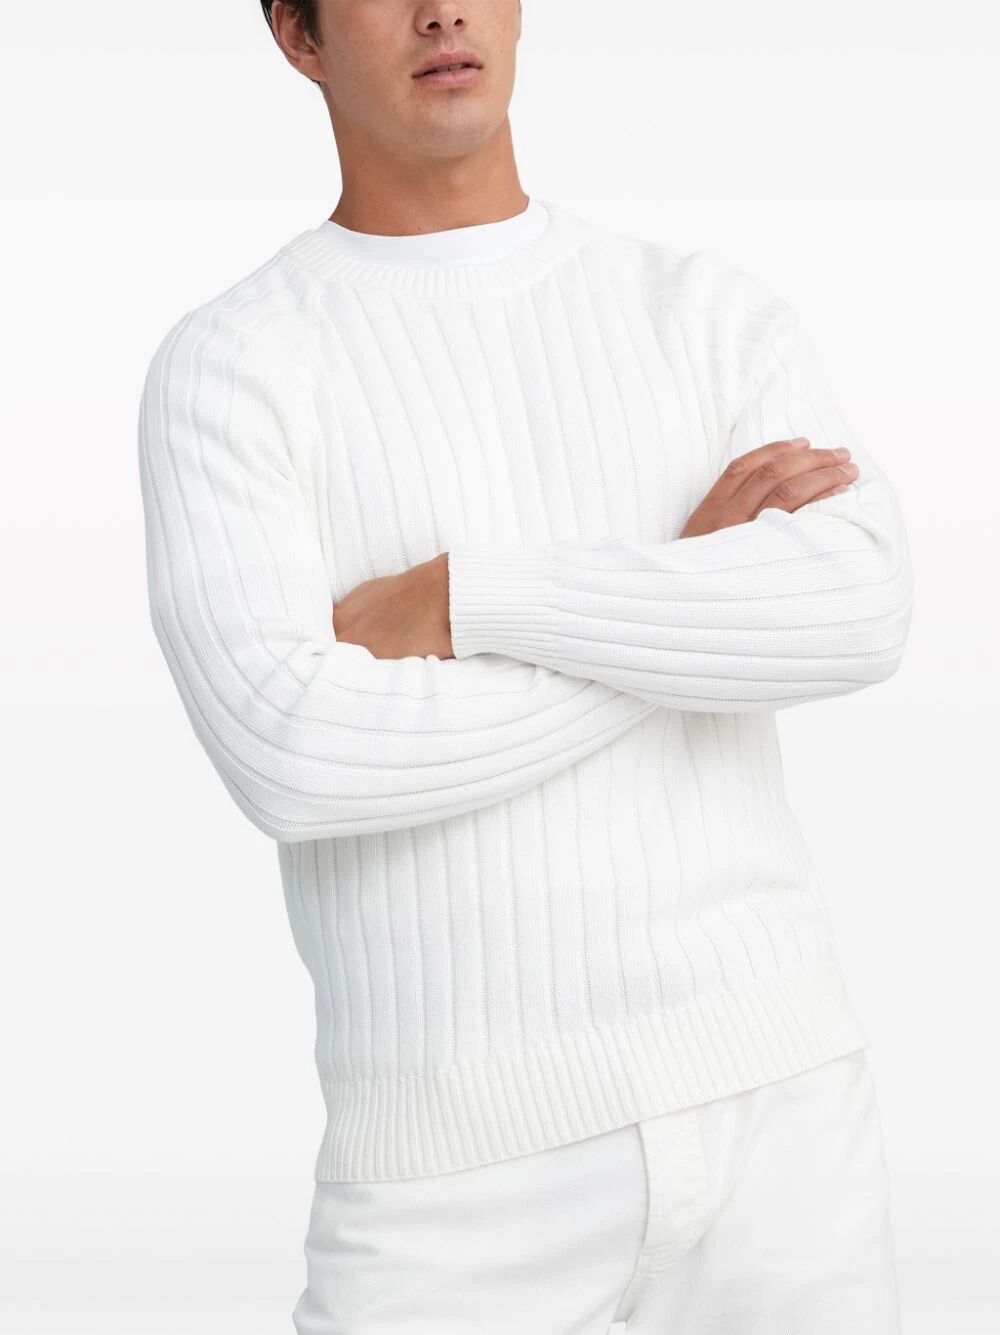 Long Sleeves Sweater